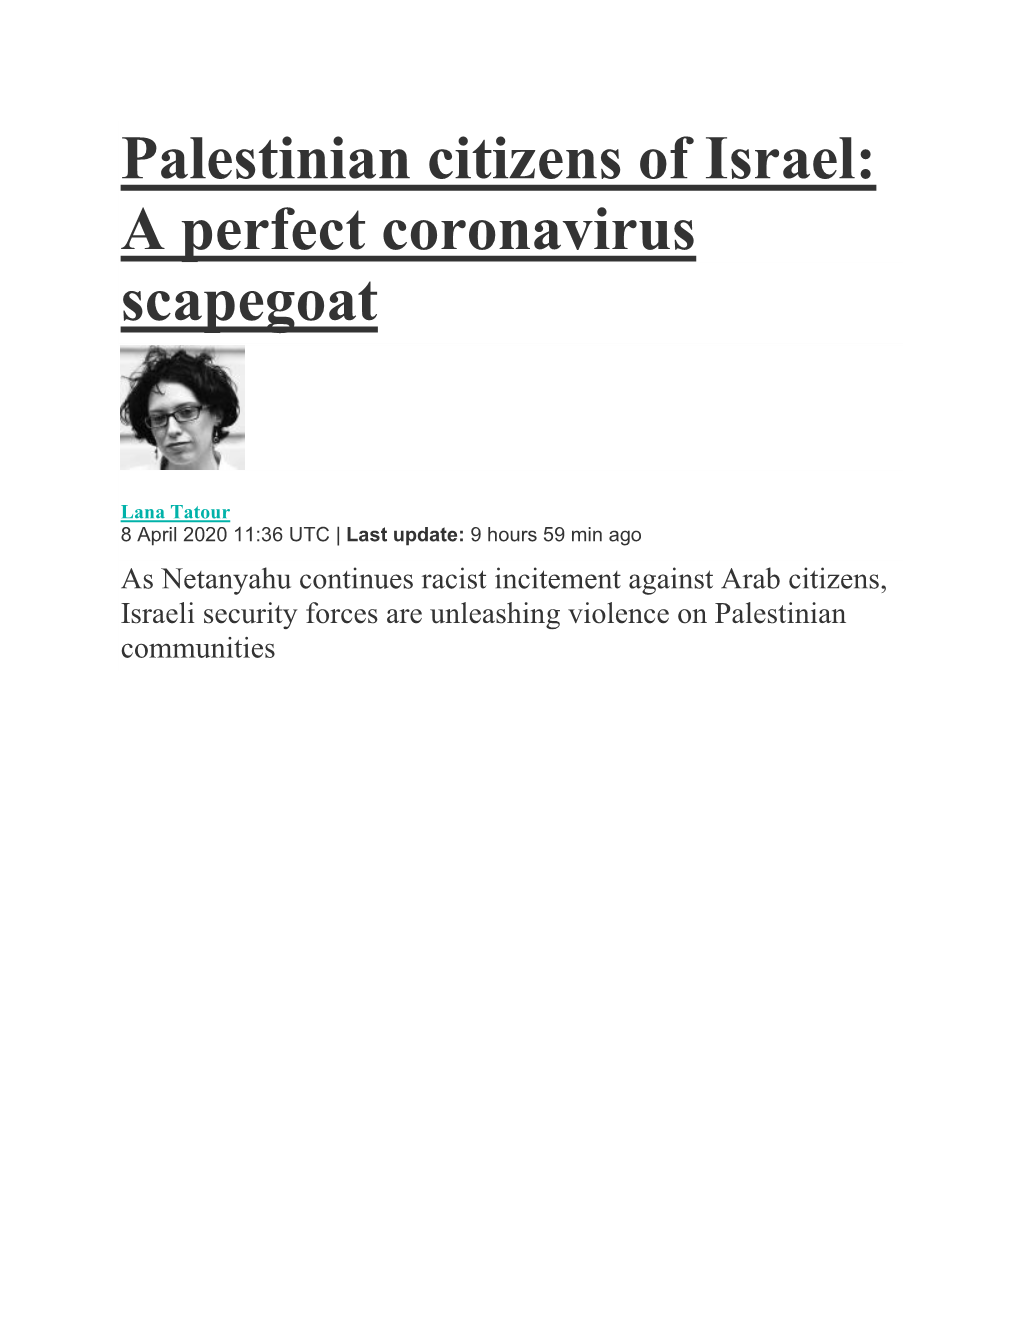 Palestinian Citizens of Israel: a Perfect Coronavirus Scapegoat